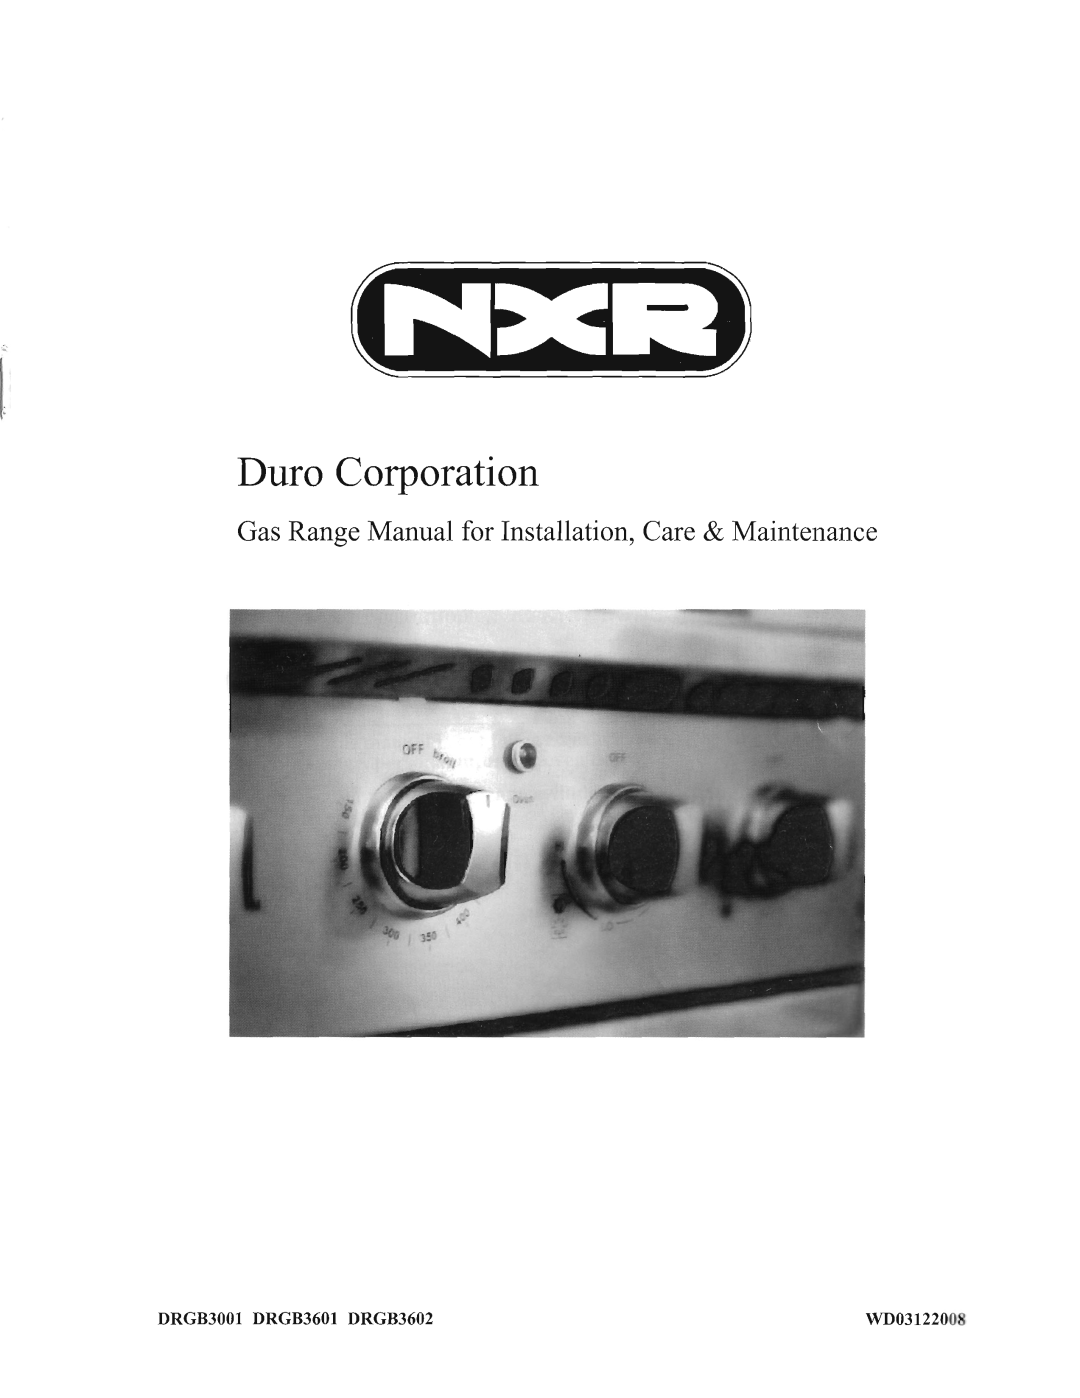 NXR DRG83602, DRGB3001, DRGB3601 manual 